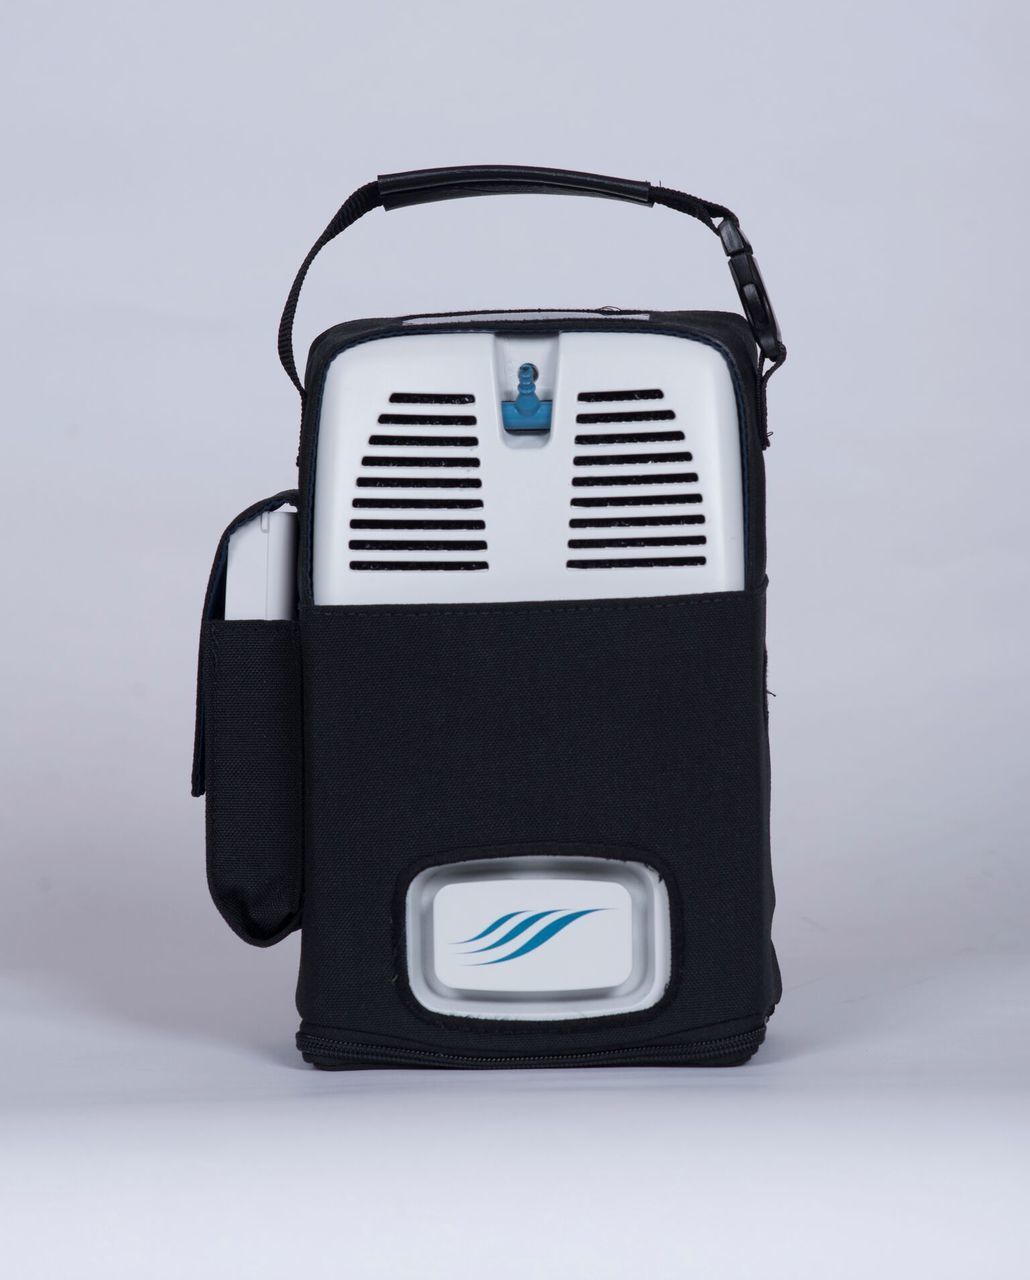 Inogen Portable Oxygen Concentrator